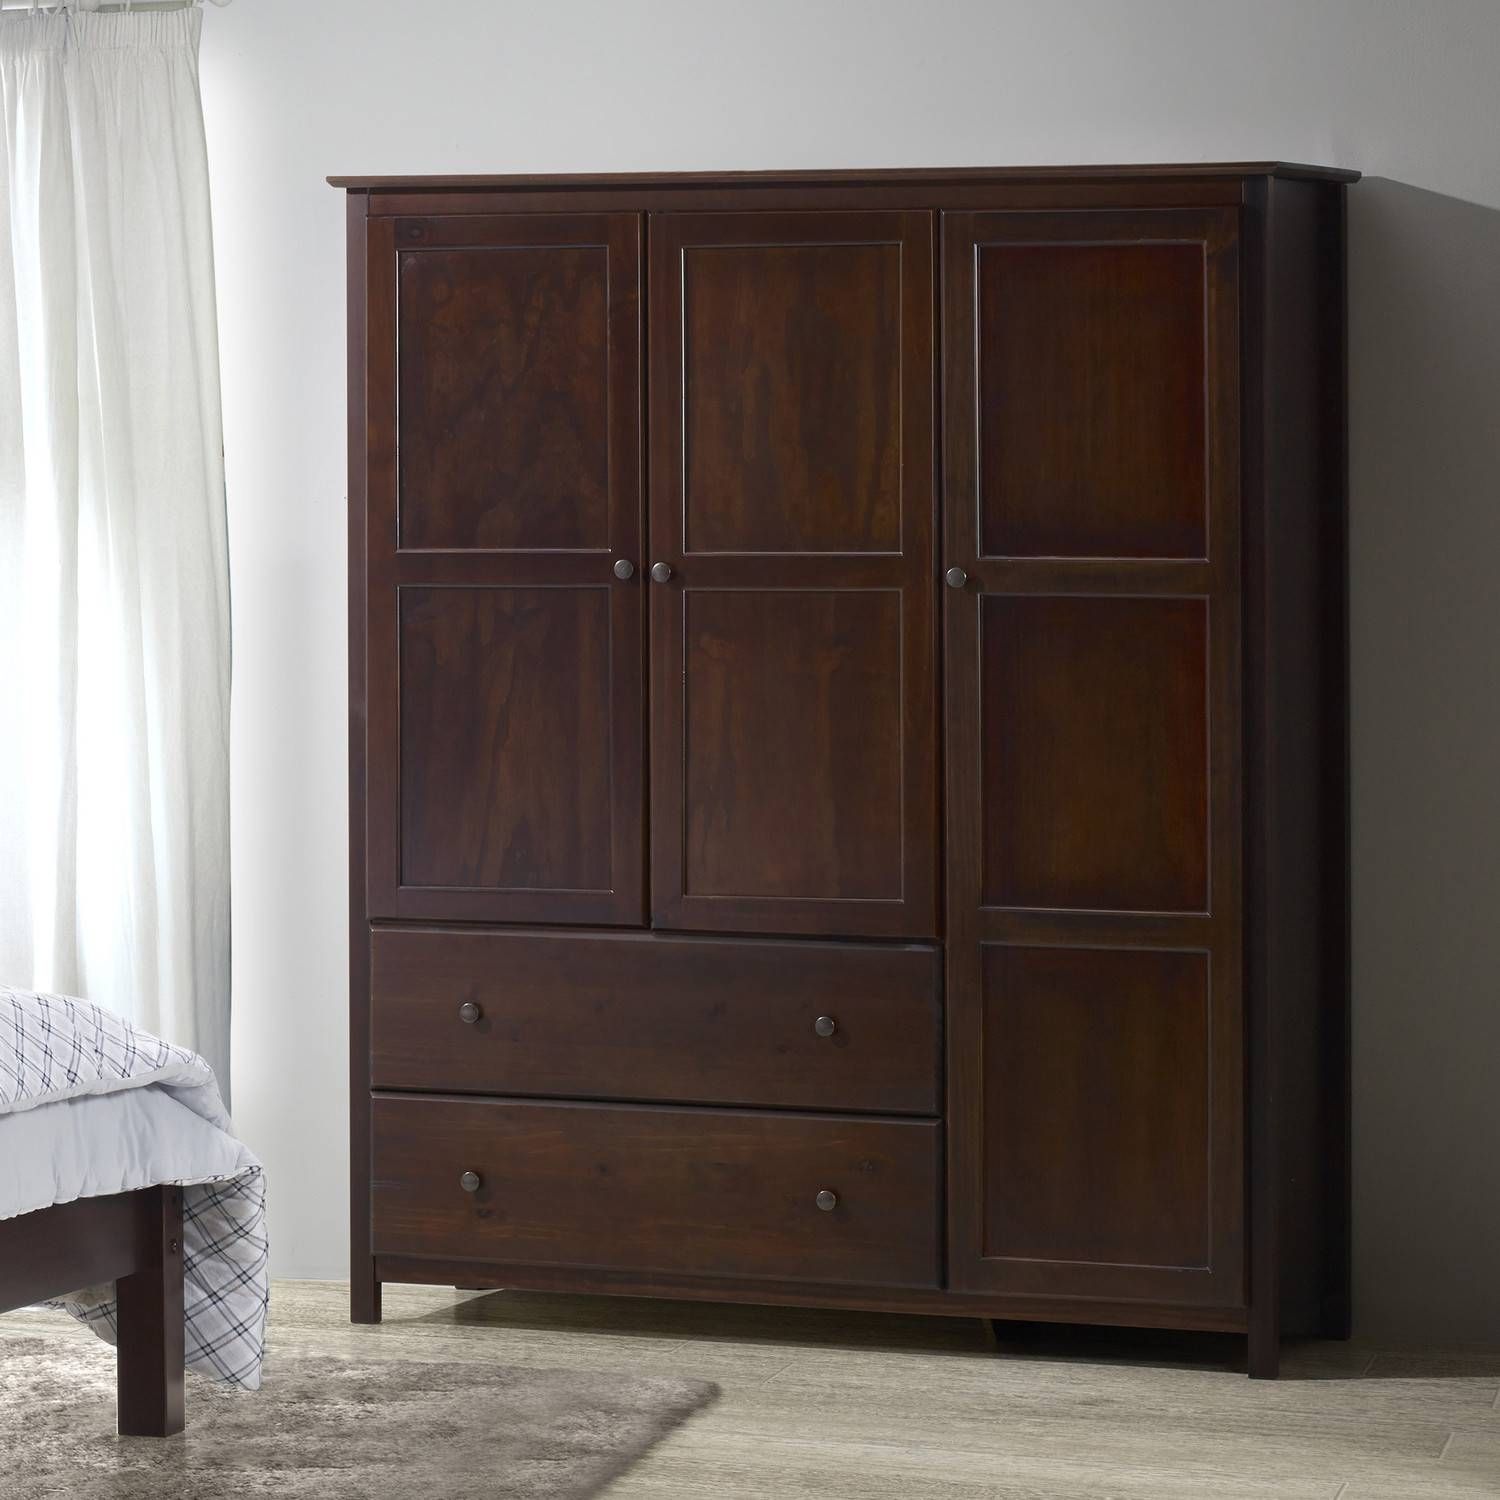 Furniture: Fancy Wardrobe Armoire For Wardrobe Organizer Idea Pertaining To Solid Dark Wood Wardrobes (View 29 of 30)